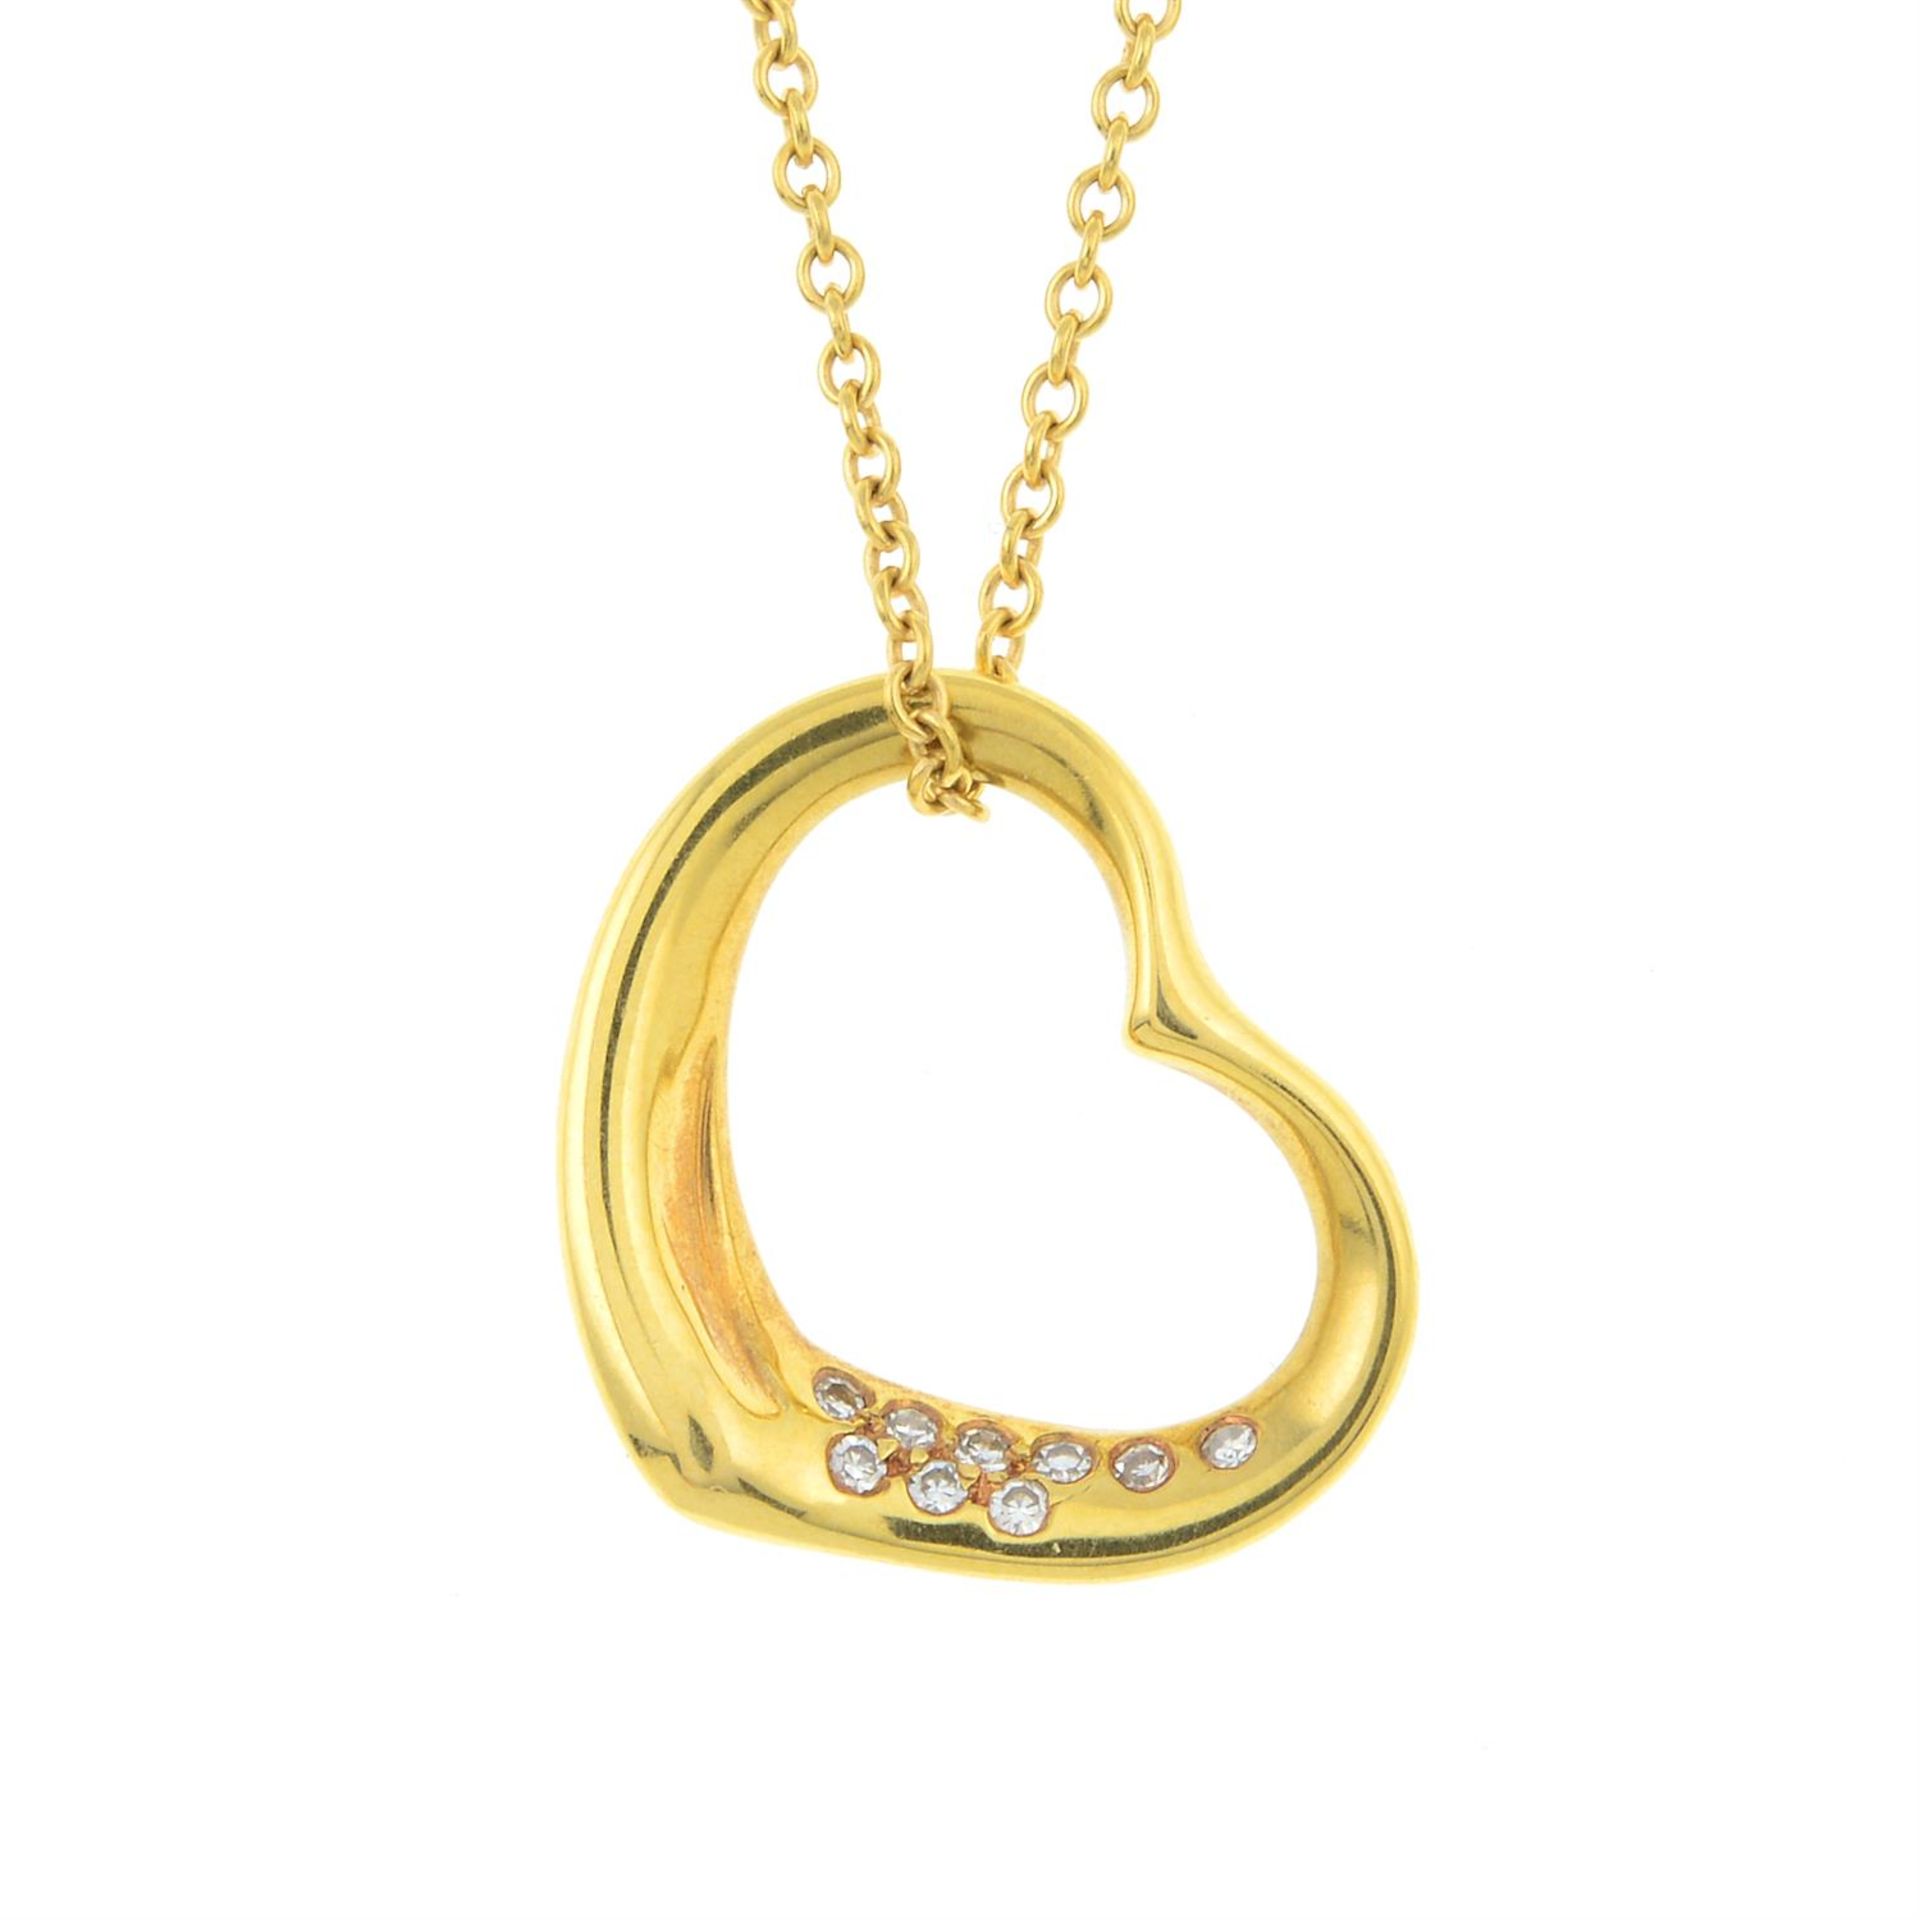 A diamond 'Open Heart' pendant, with chain, by Elsa Peretti for Tiffany & Co.